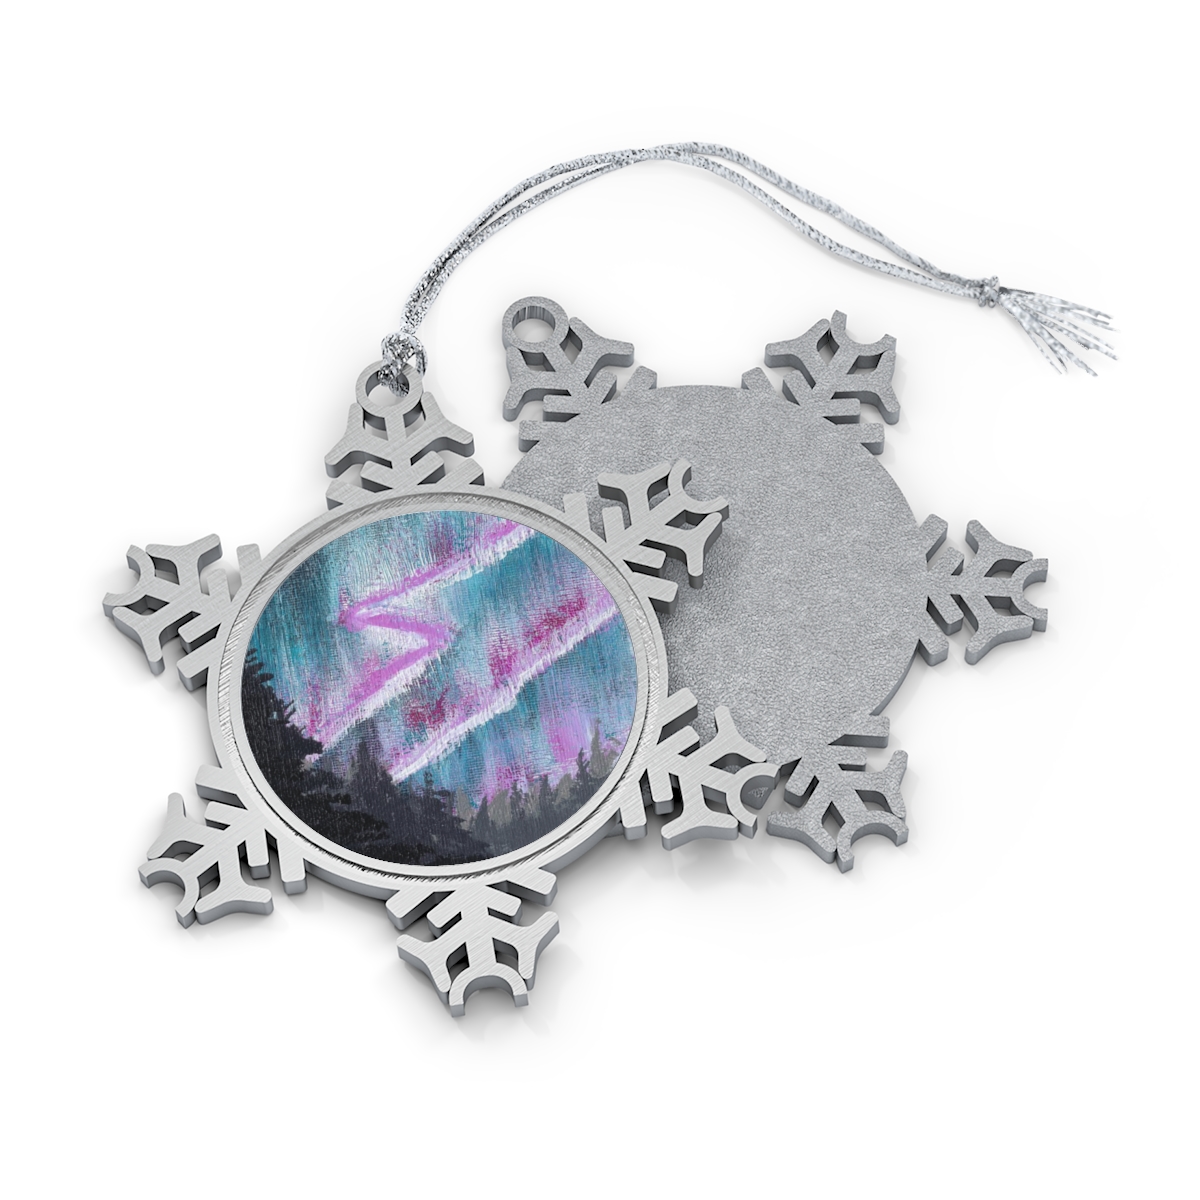 Pewter Snowflake Ornament - Sizzling Skies